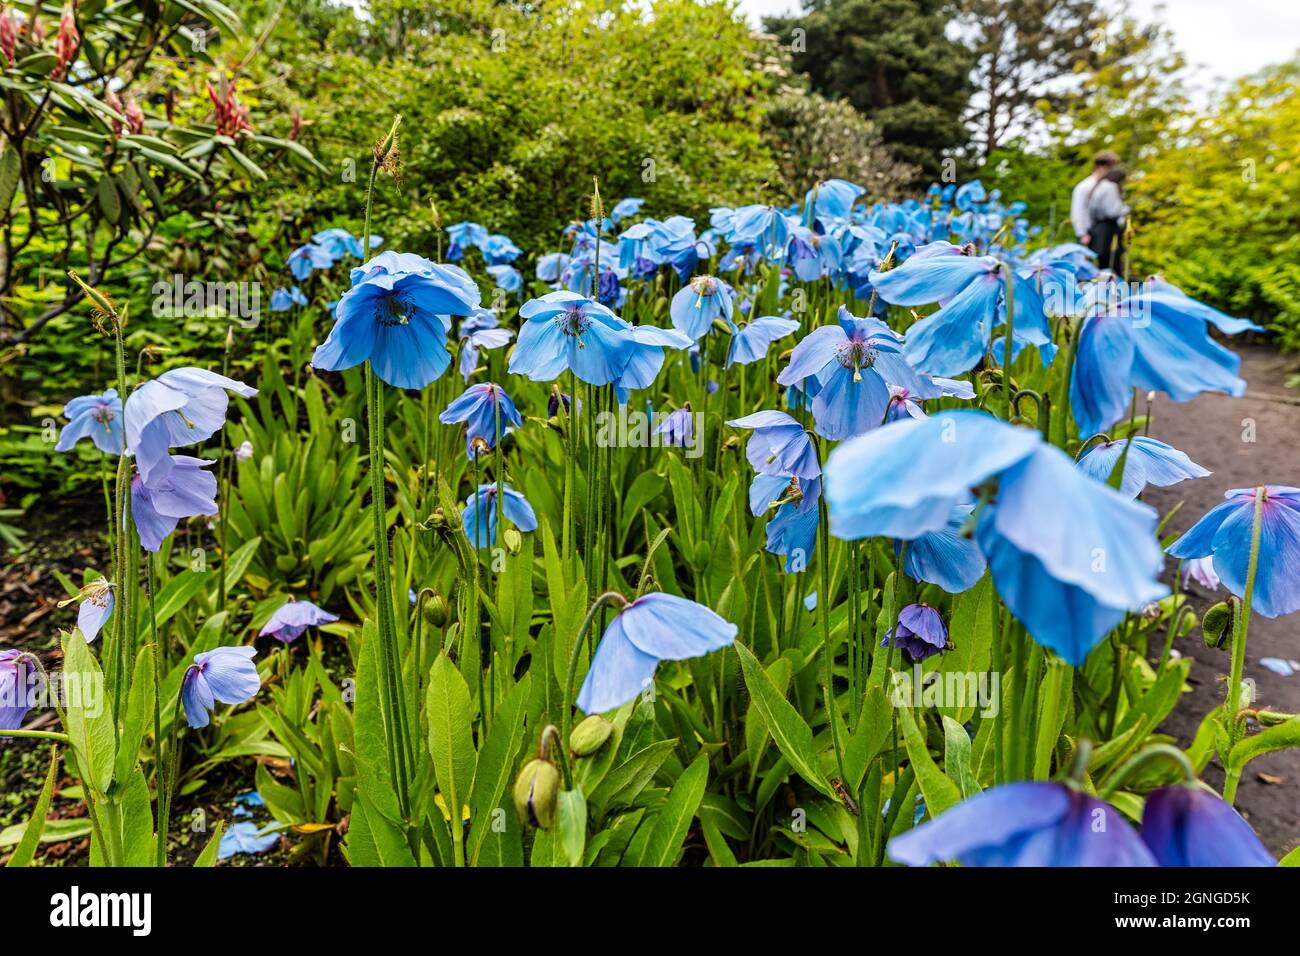 Himalayan blue poppies (Meconopsis baileyi or Meconopsis betonicifolia) in flowerbed, Scotland, UK Stock Photo